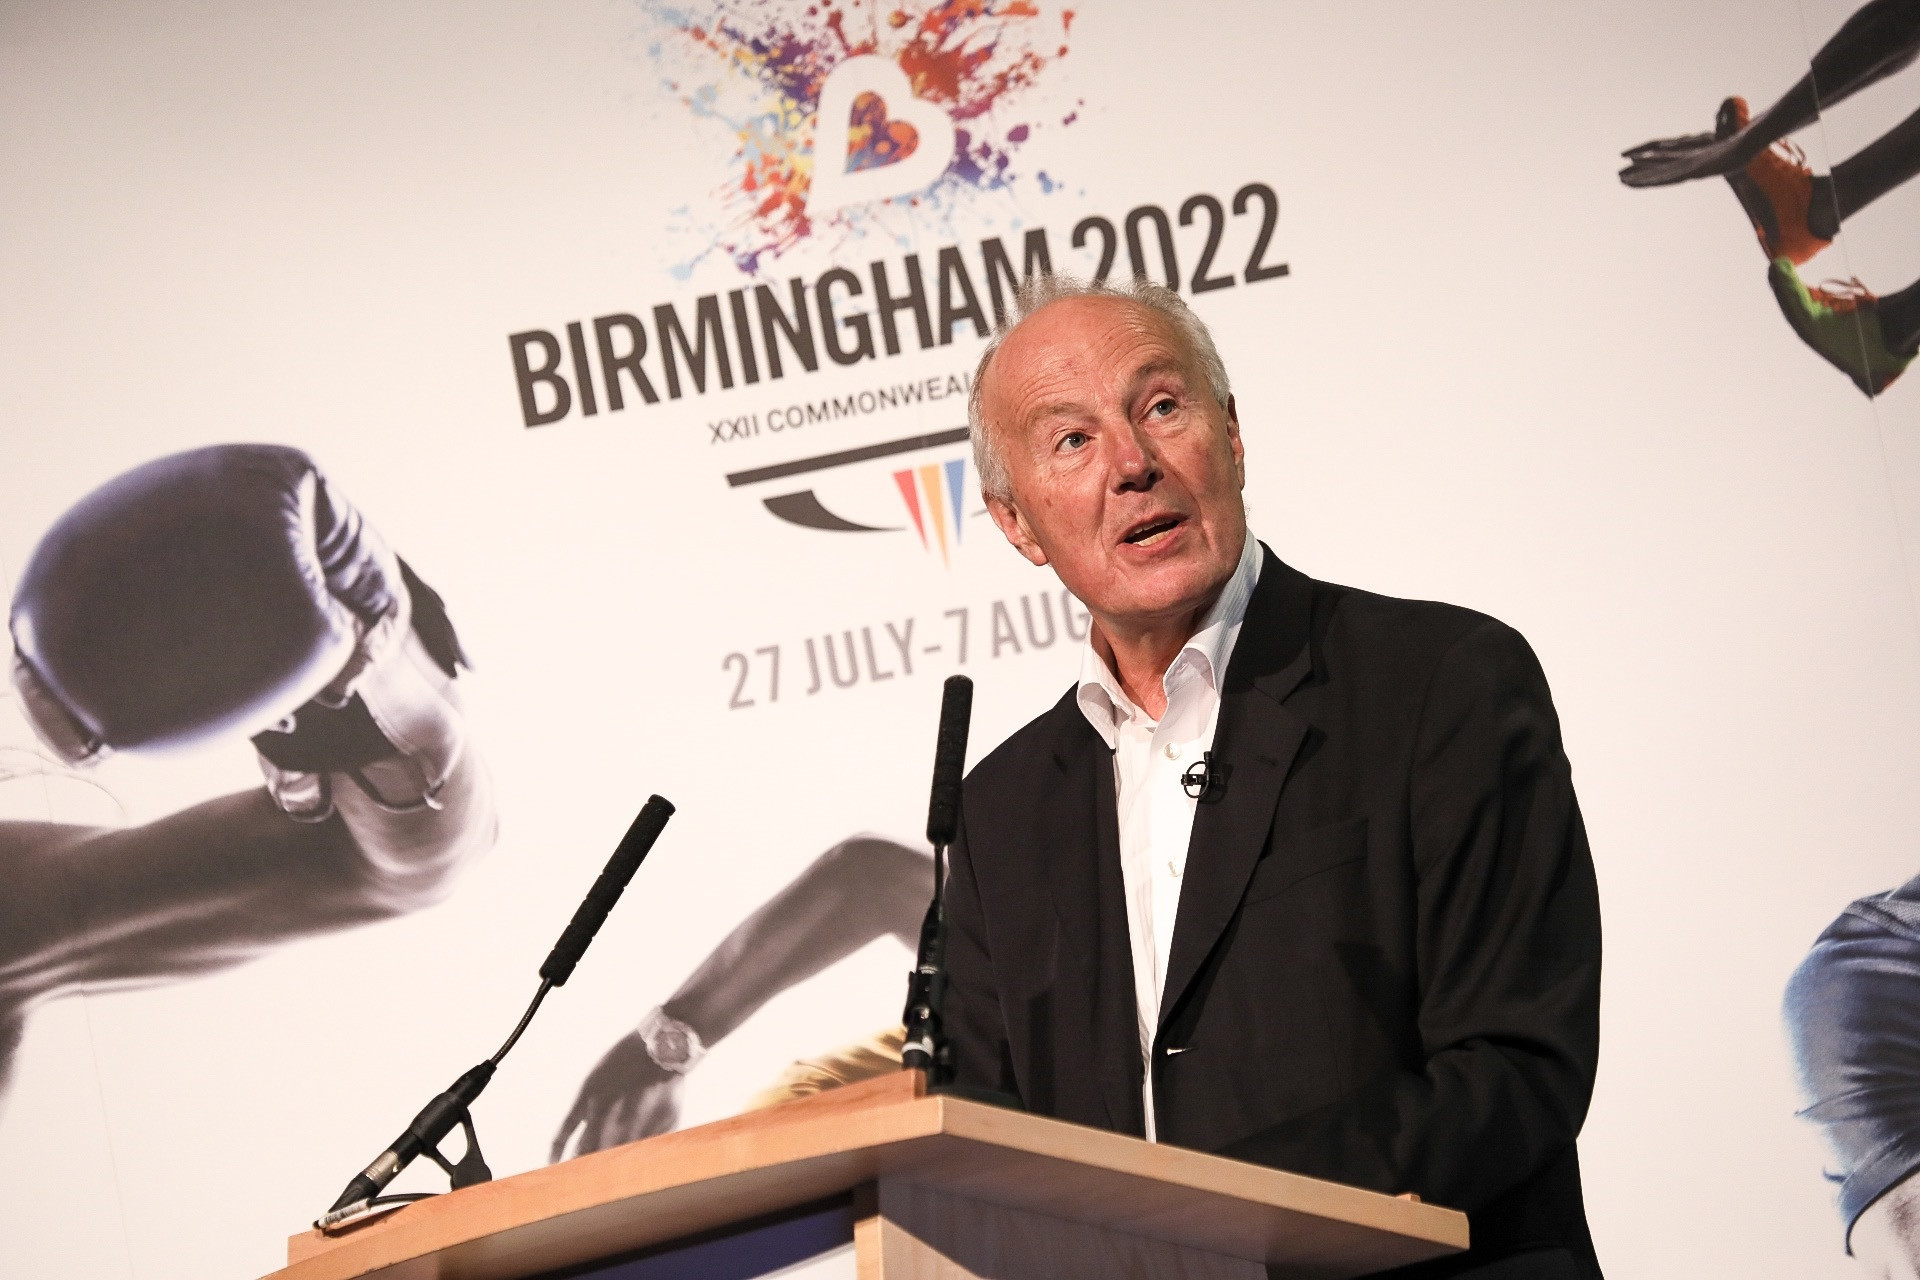 Birmingham 2022 chair John Crabtree helped host the event ©Birmingham 2022
